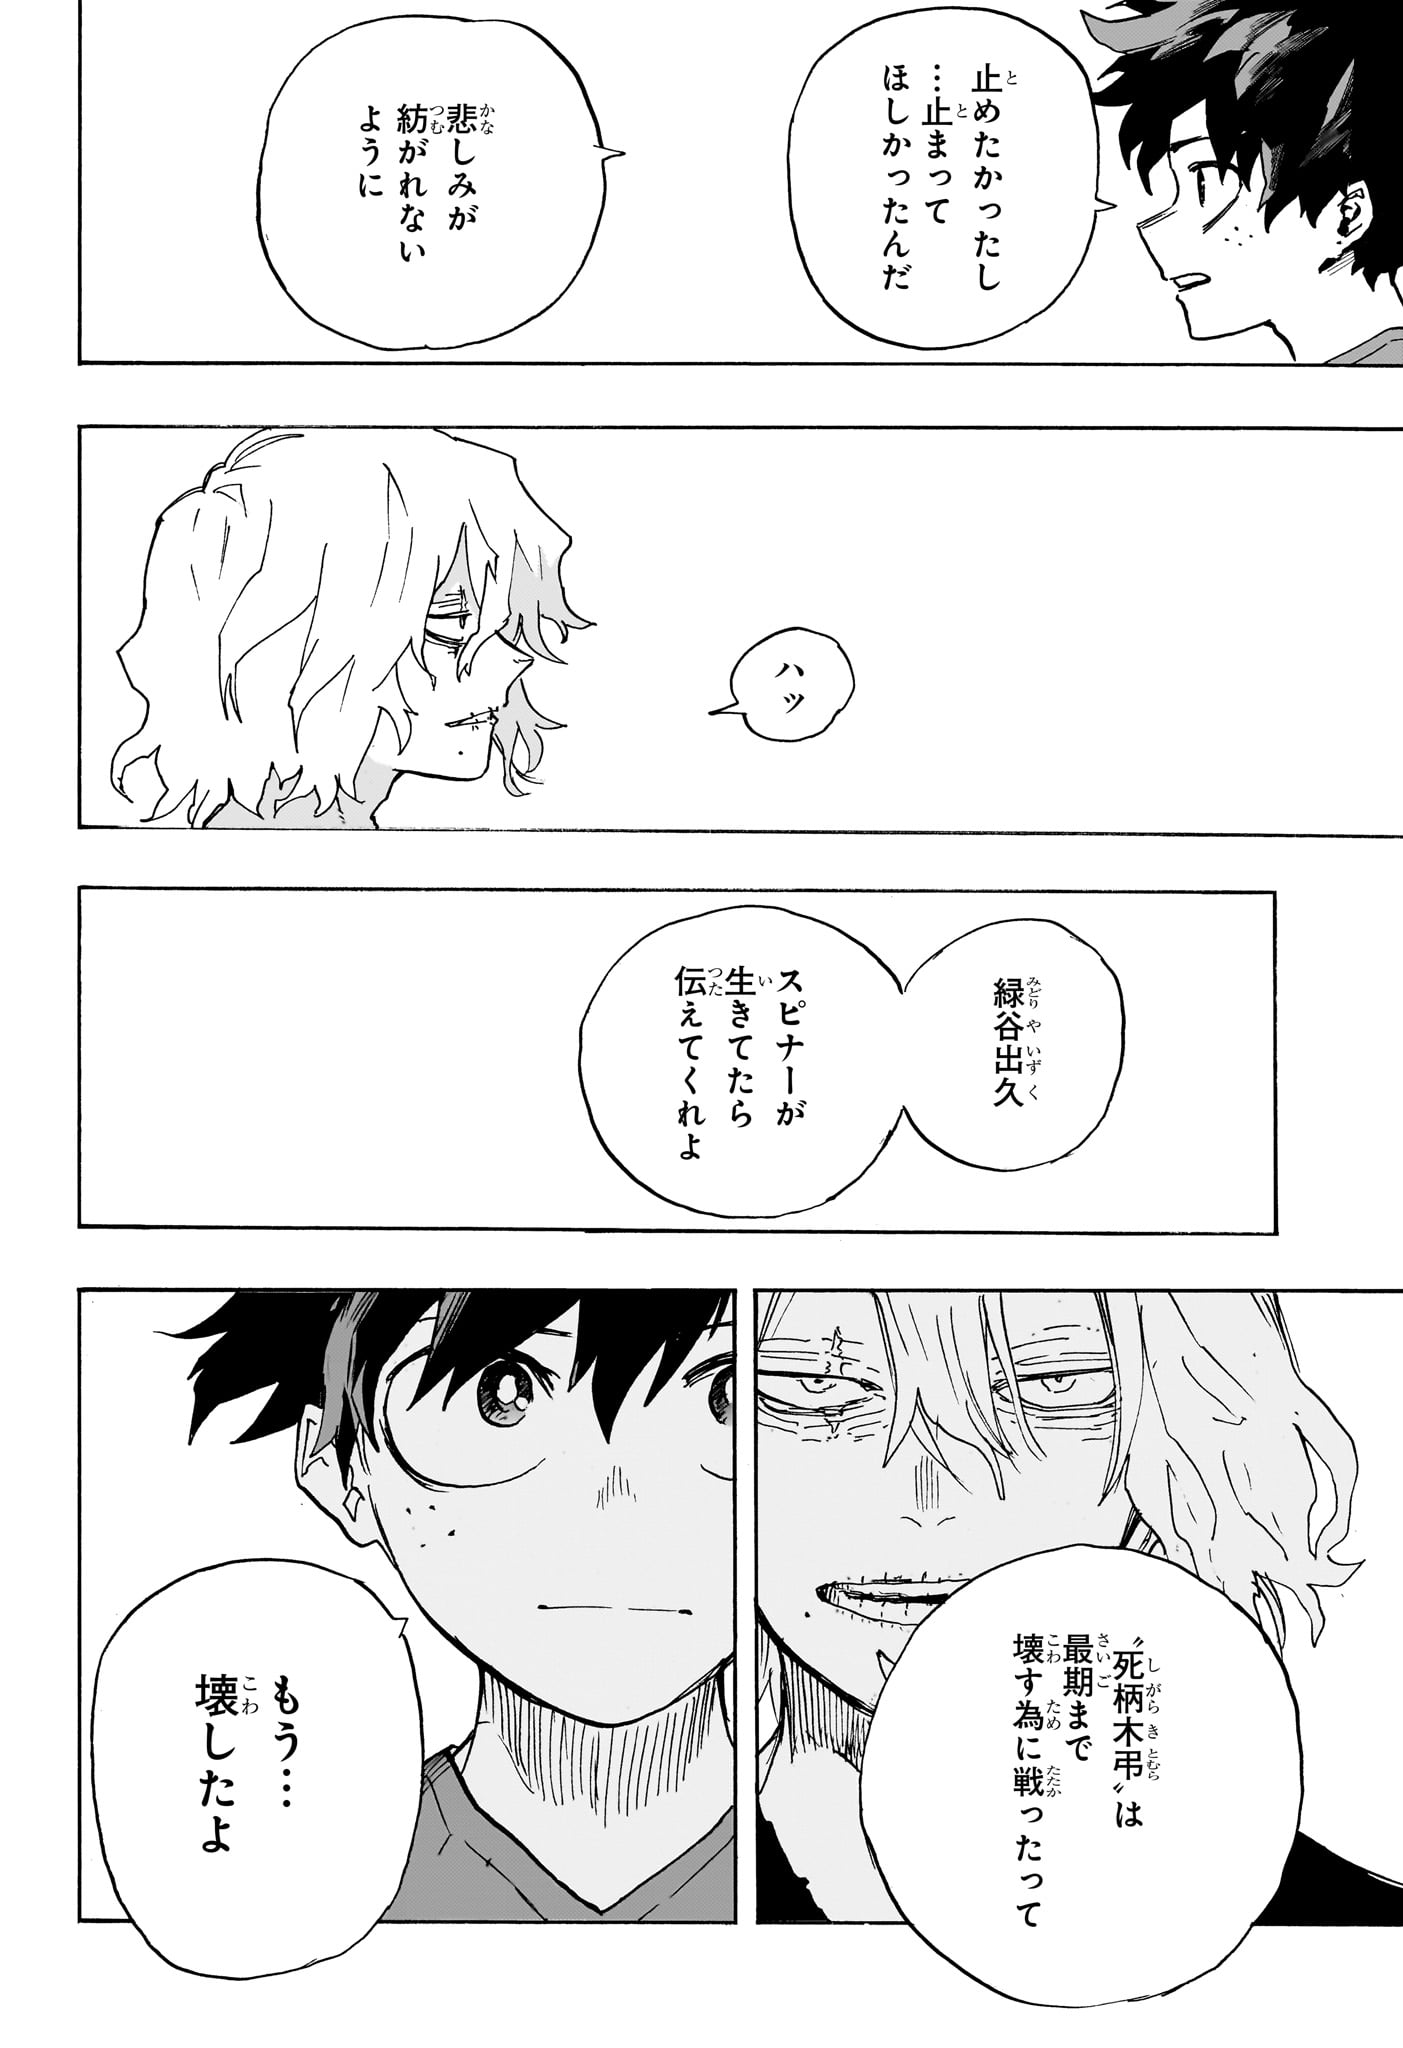 Boku no Hero Academia - Chapter 423 - Page 14